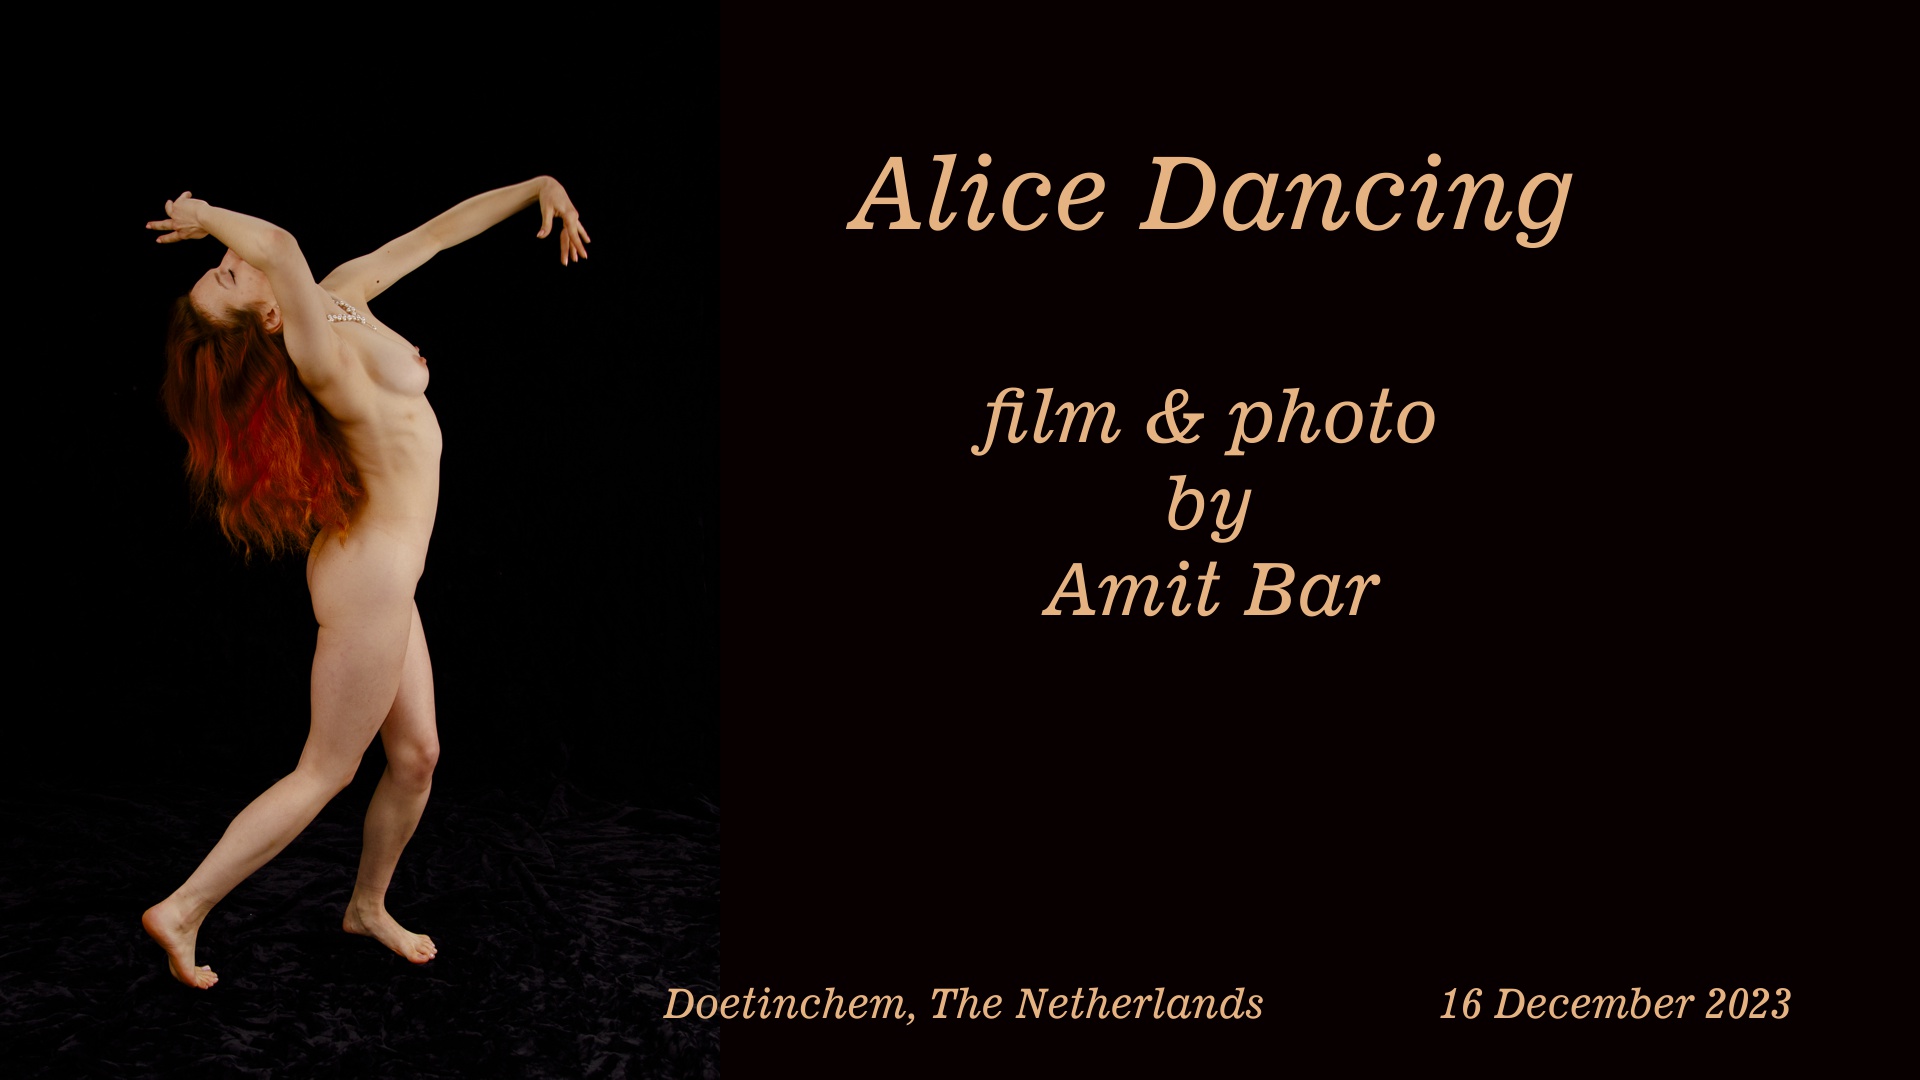 Alice dancing